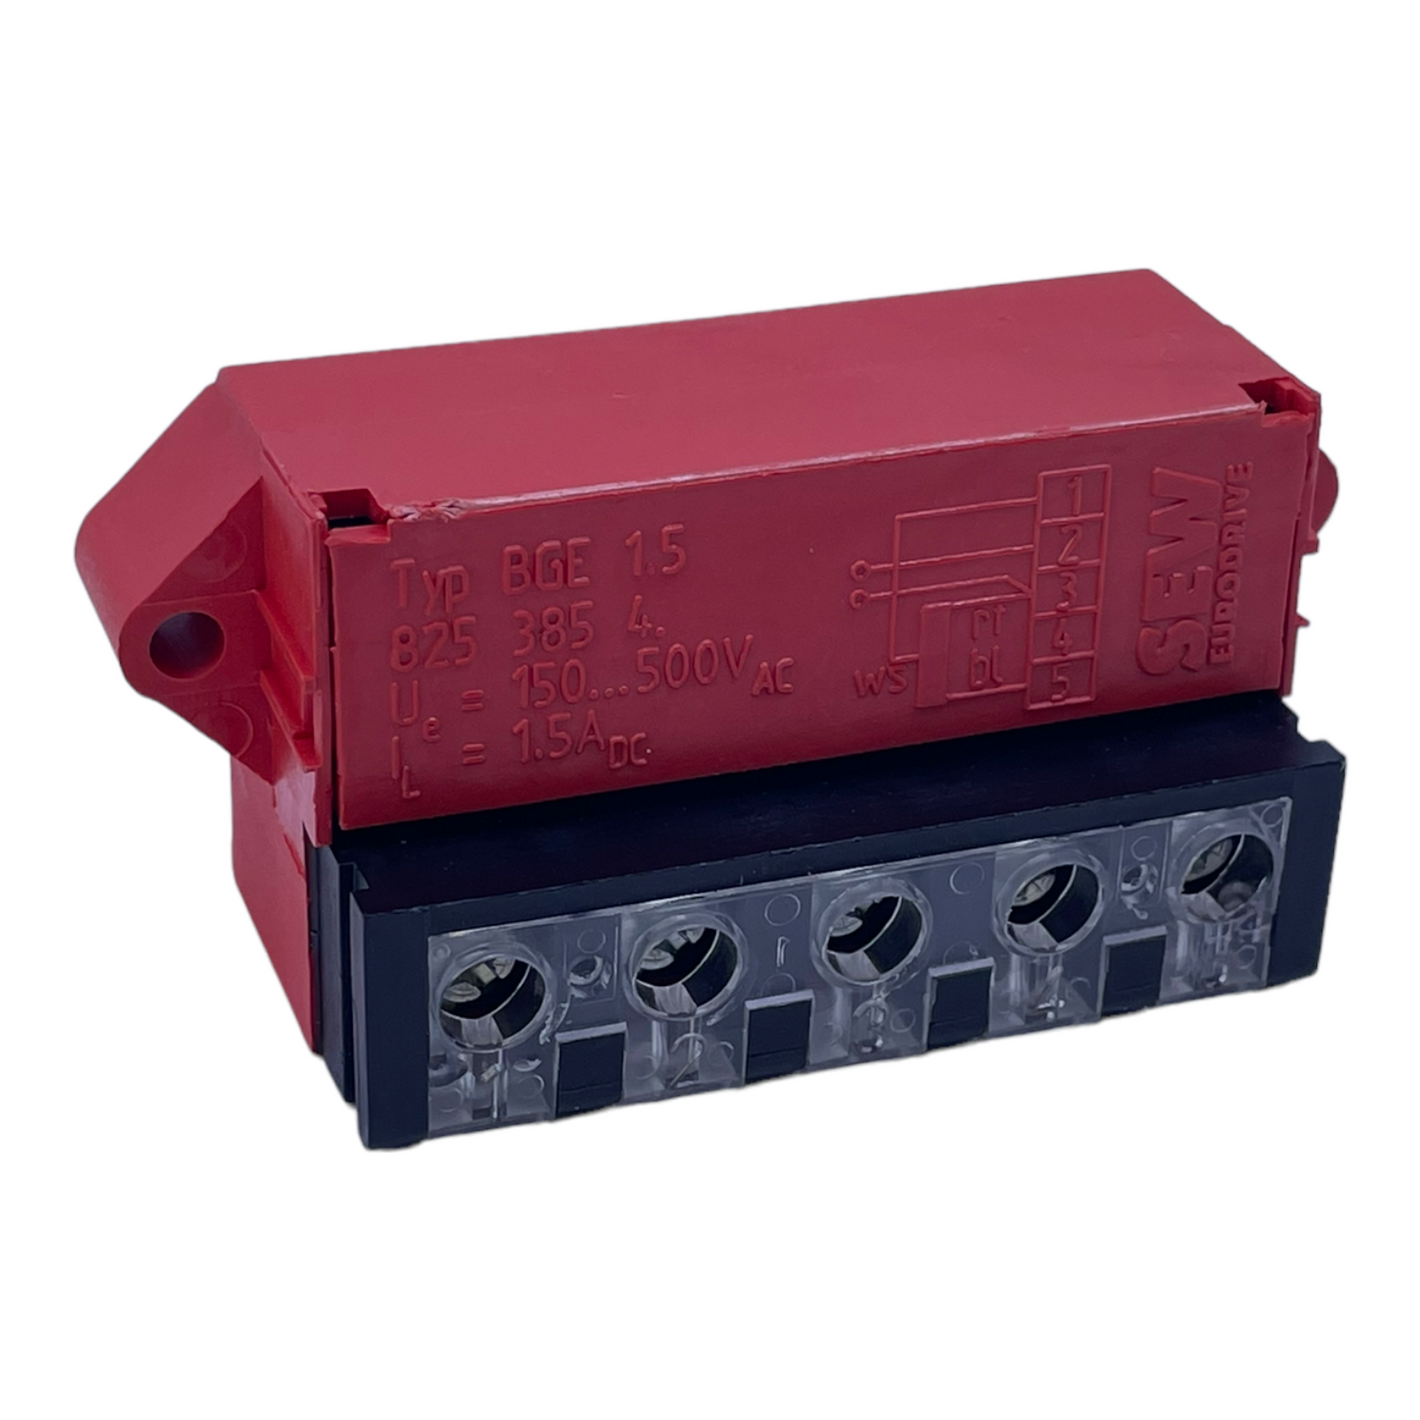 SEW BGE 1.5 brake rectifier 8253854 150…500V AC 1.5A